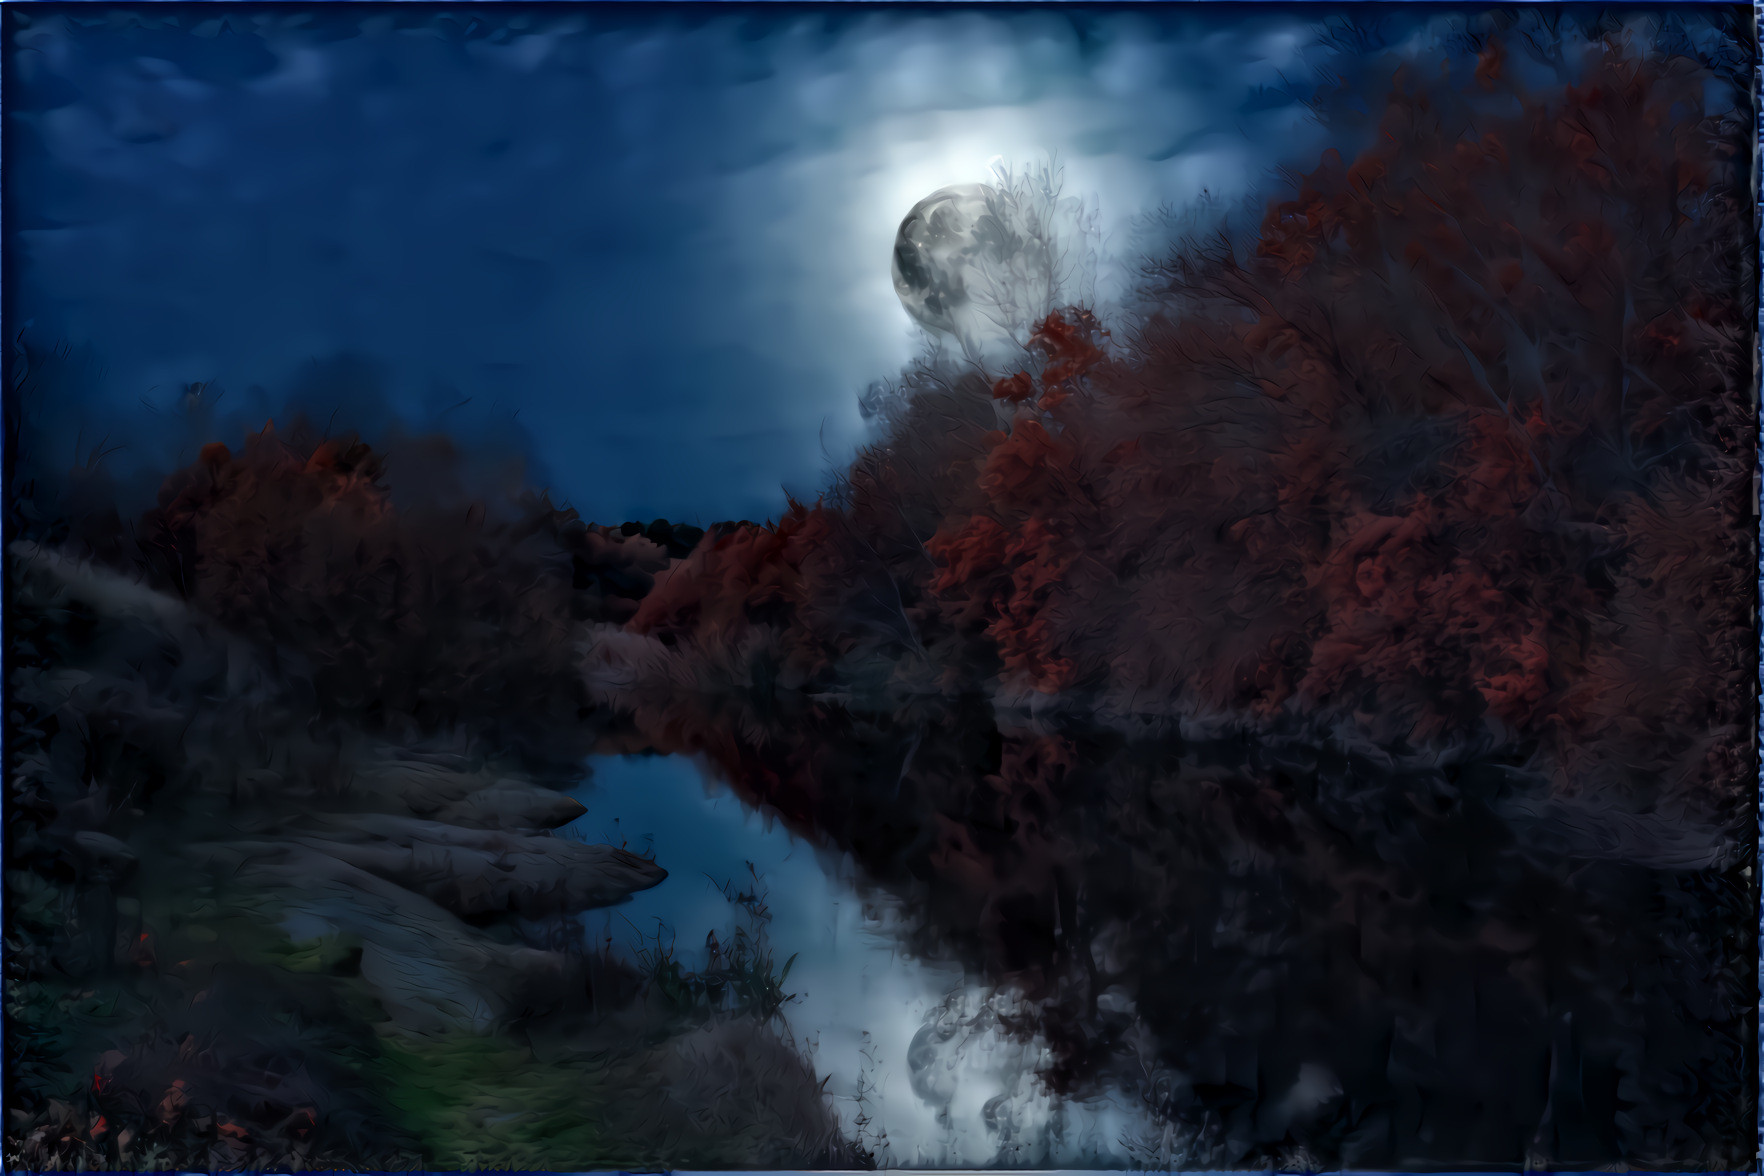 Night, Moon, Stream and Trees